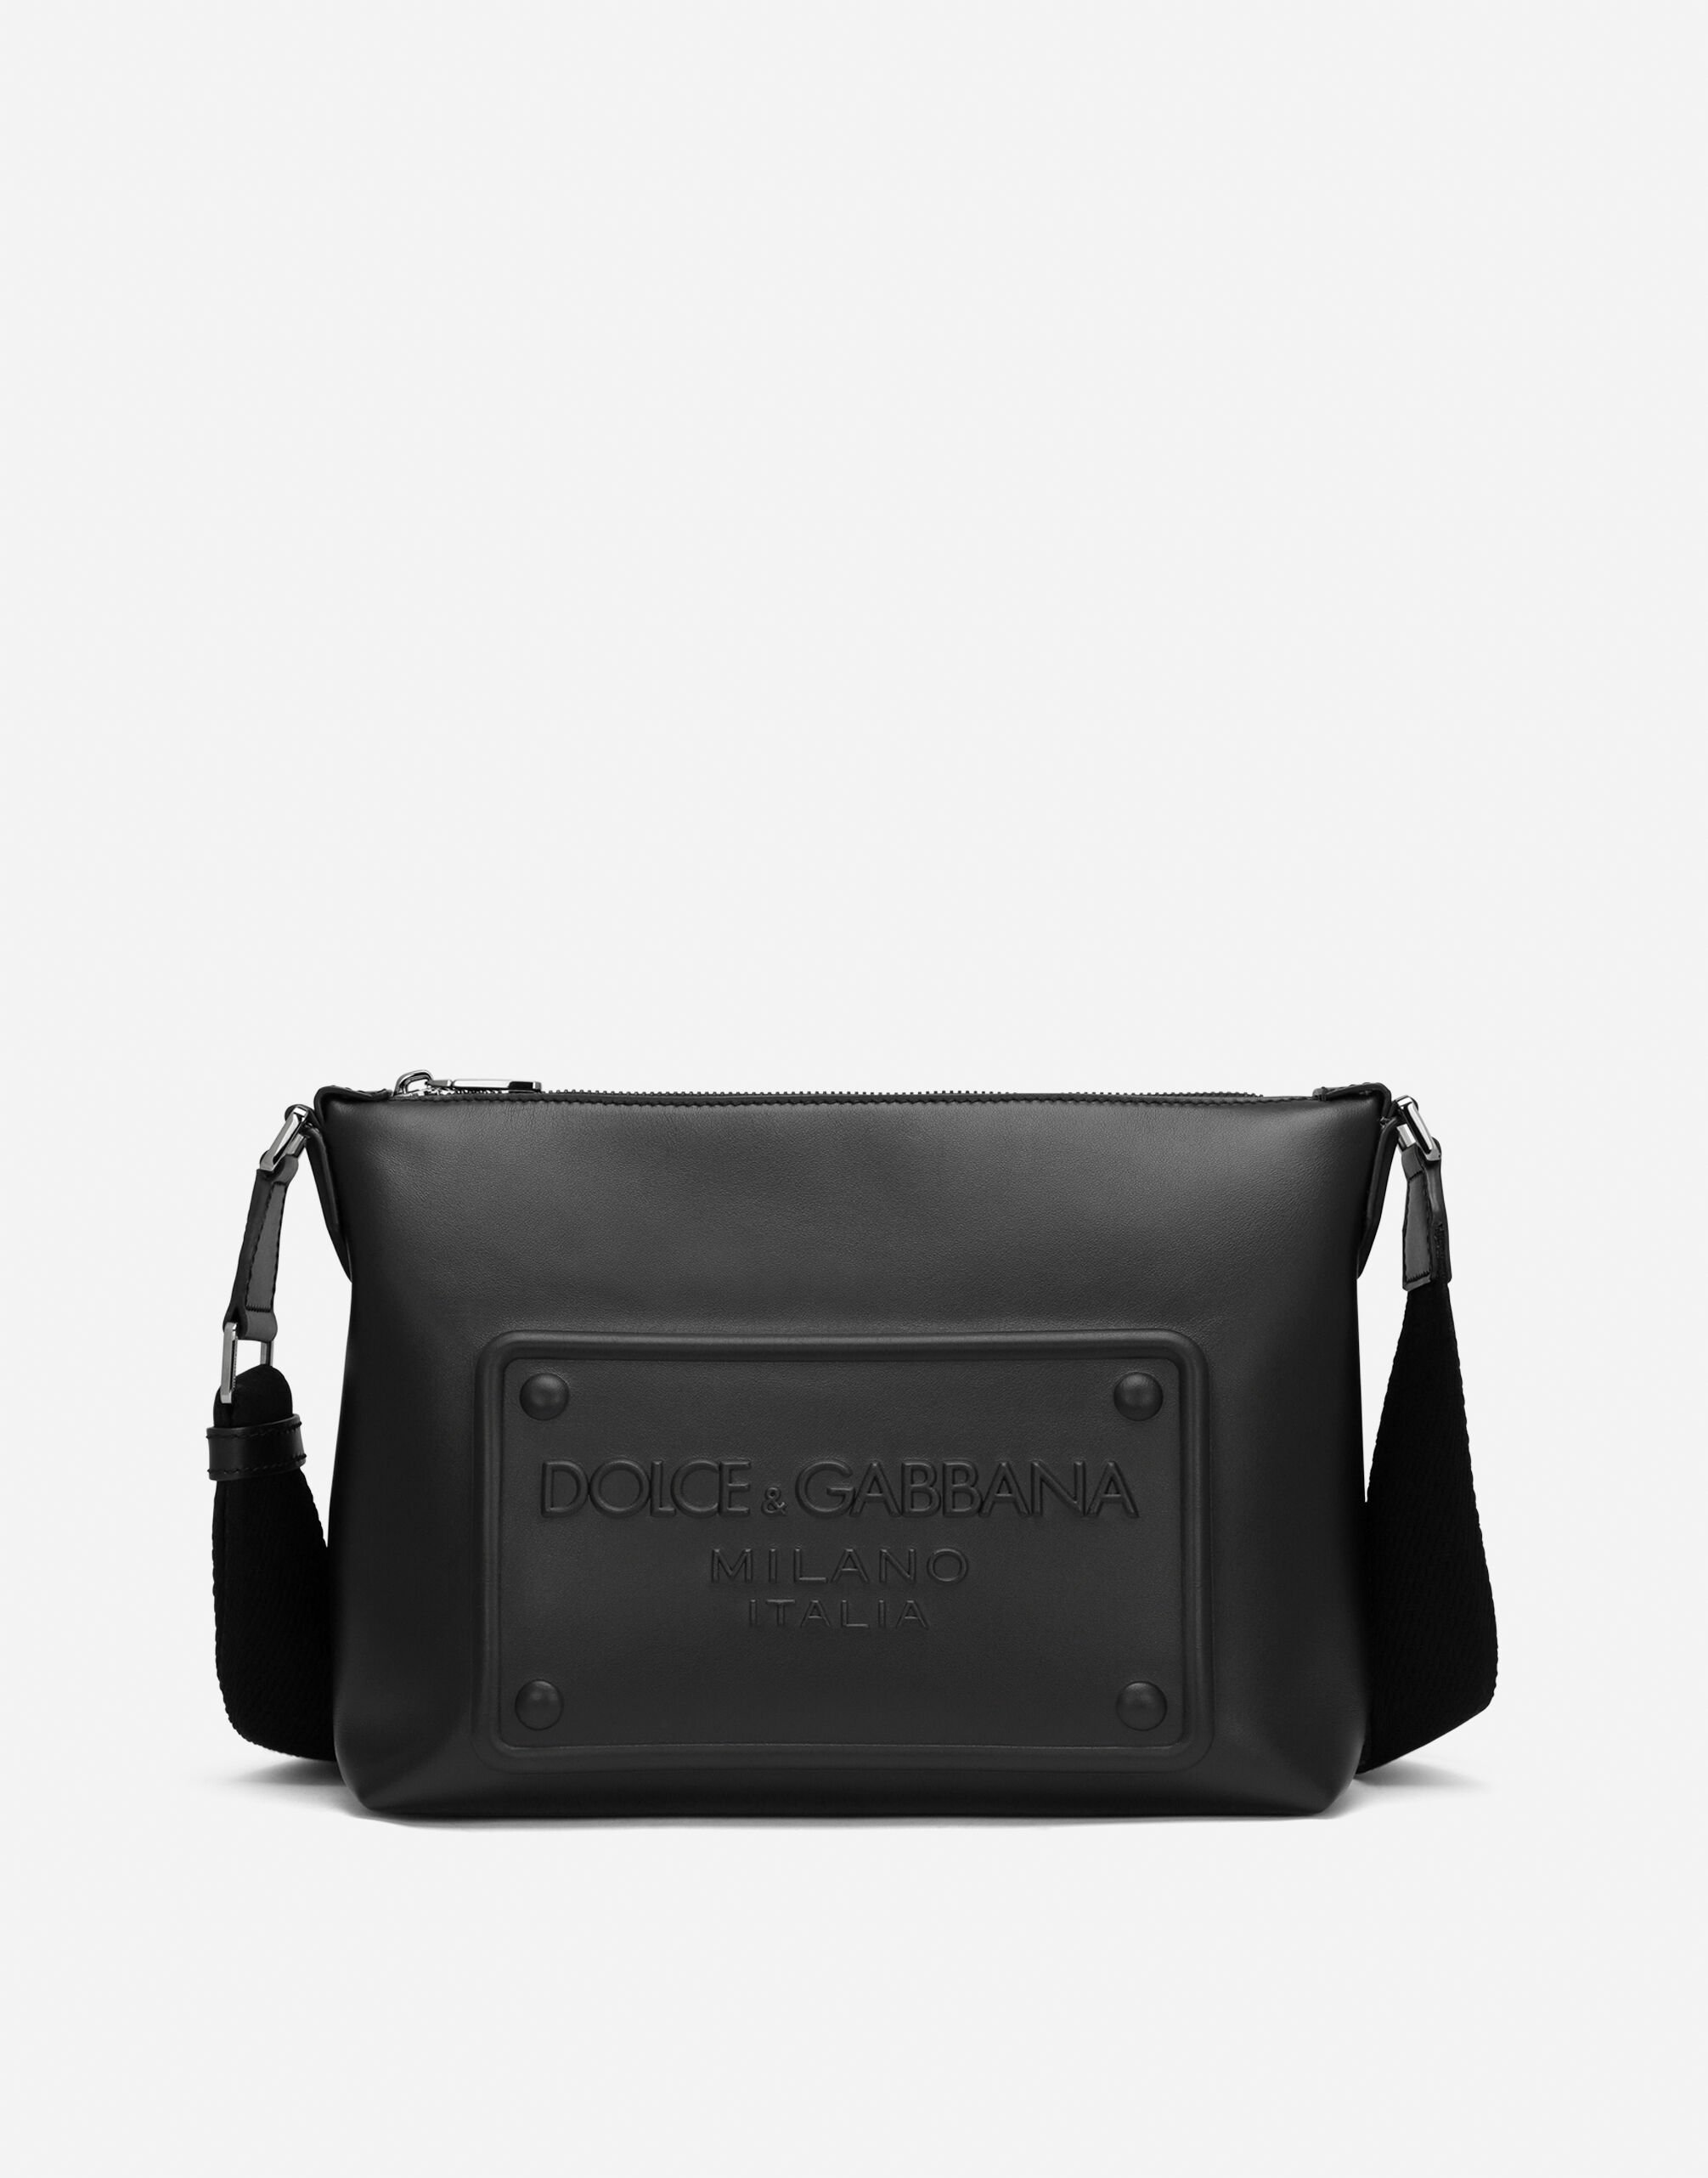 Dolce&Gabbana حقيبة كروس بودي من جلد عجل بشعار بارز متعدد الألوان G2QU6TFRBCH